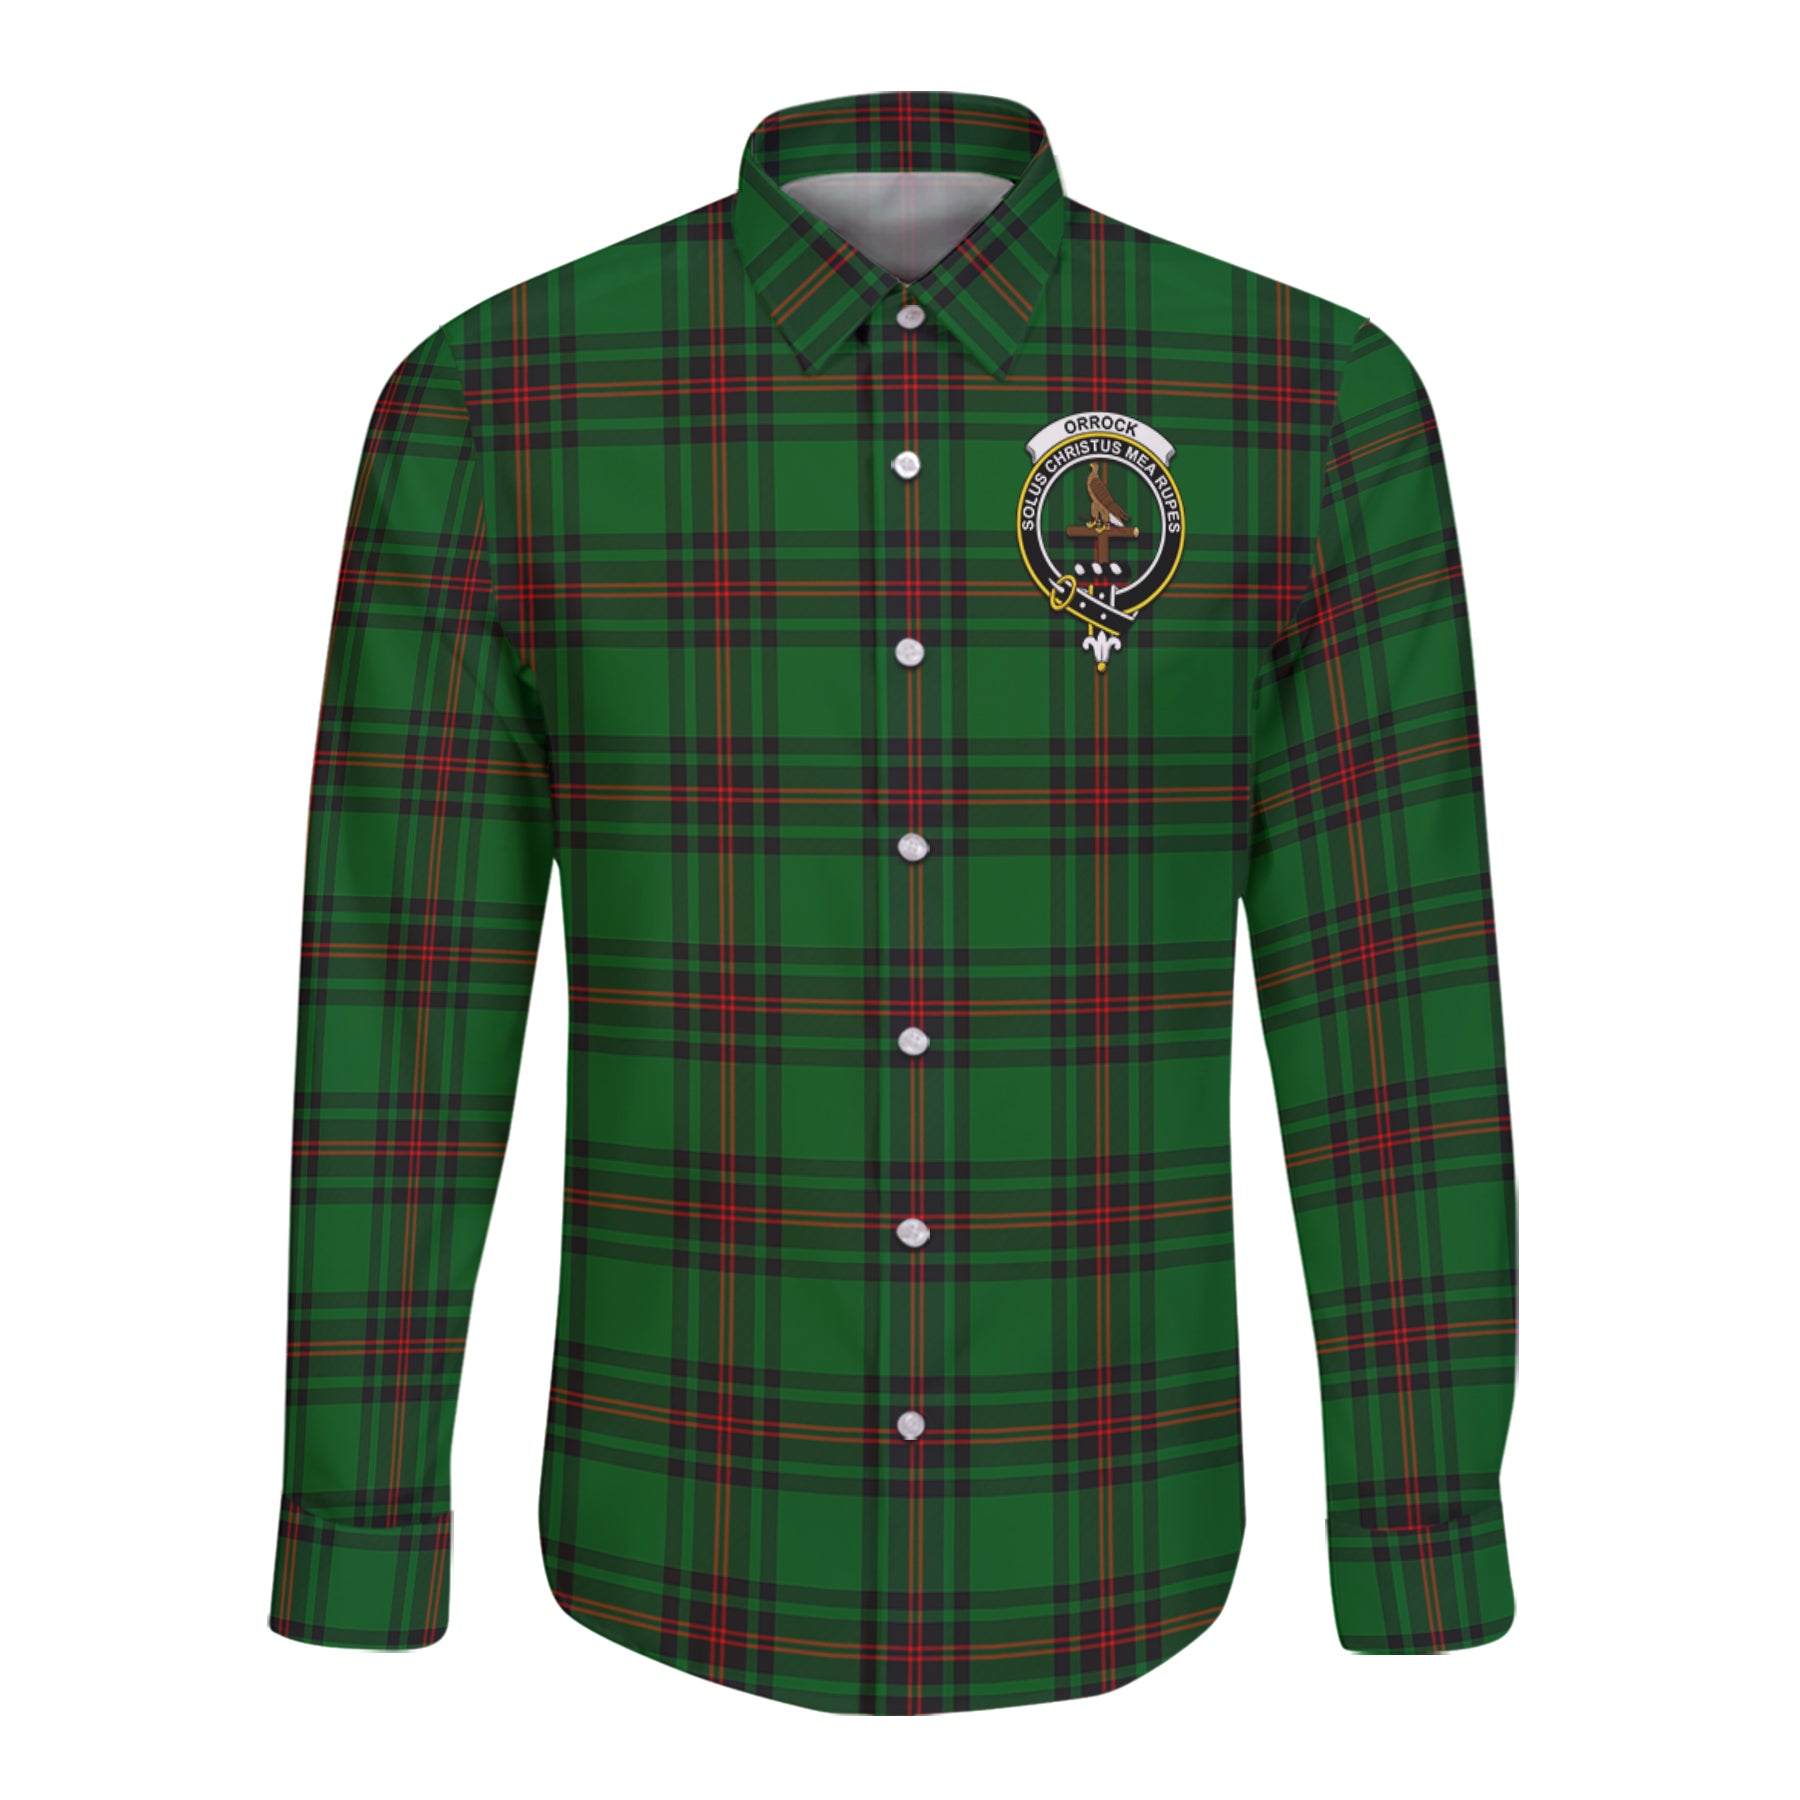 Orrock Tartan Long Sleeve Button Up Shirt with Scottish Family Crest K23